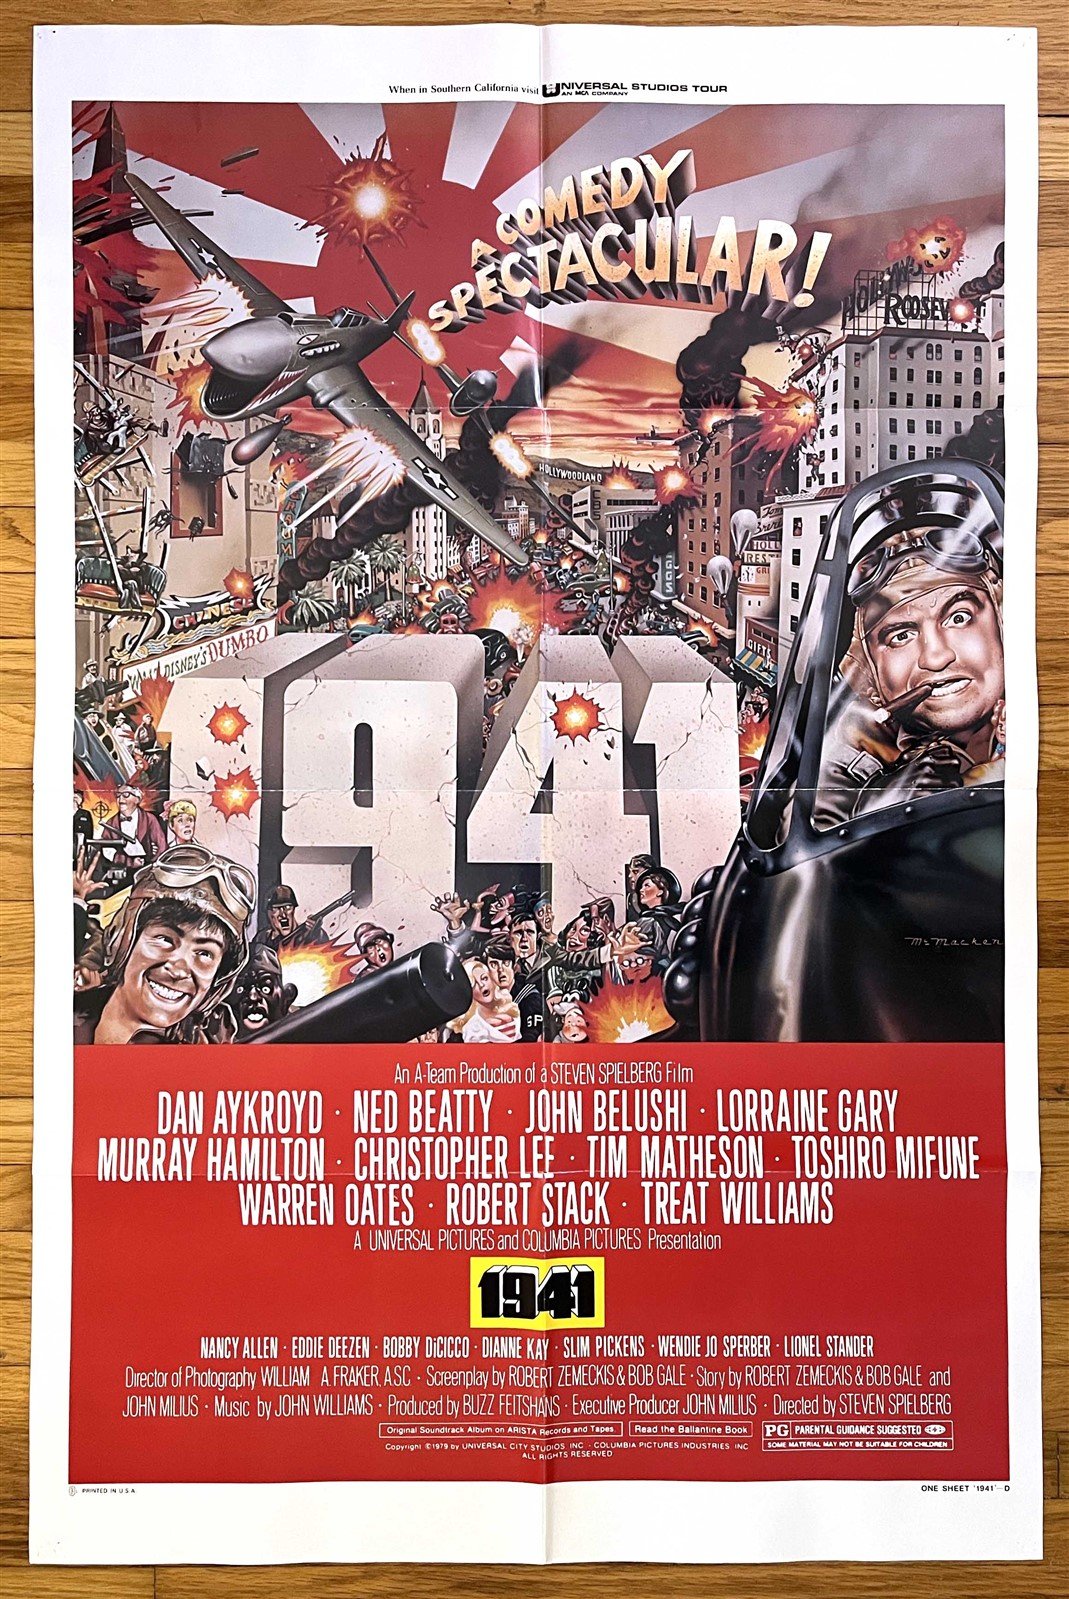 Steven Spielberg 1941 John Belushi Dan Aykroyd original 27x41 movie poster 1979